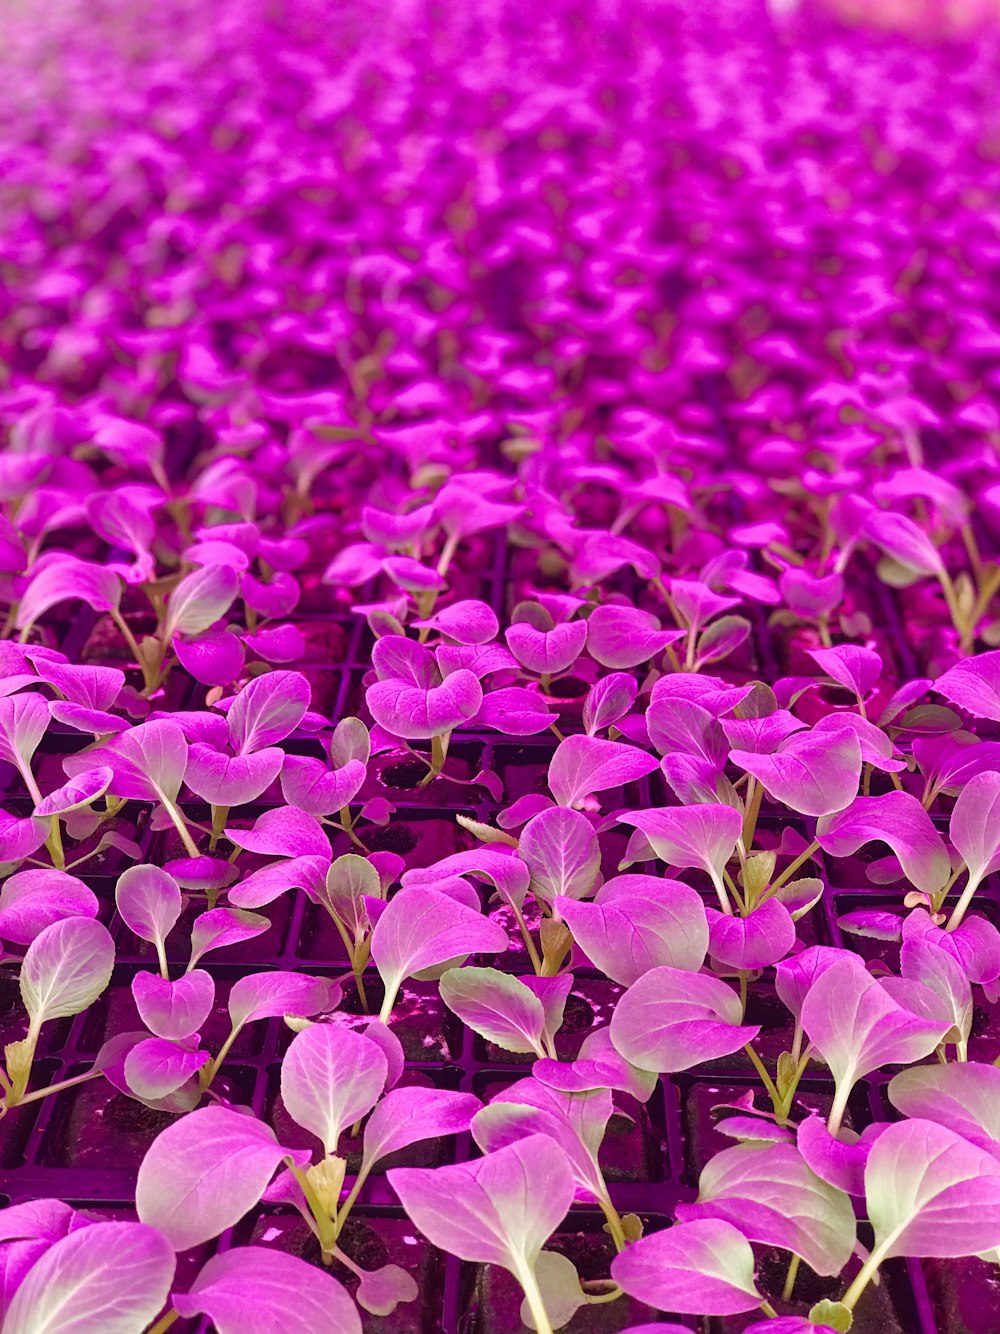 purple flowers in shallow focus shot